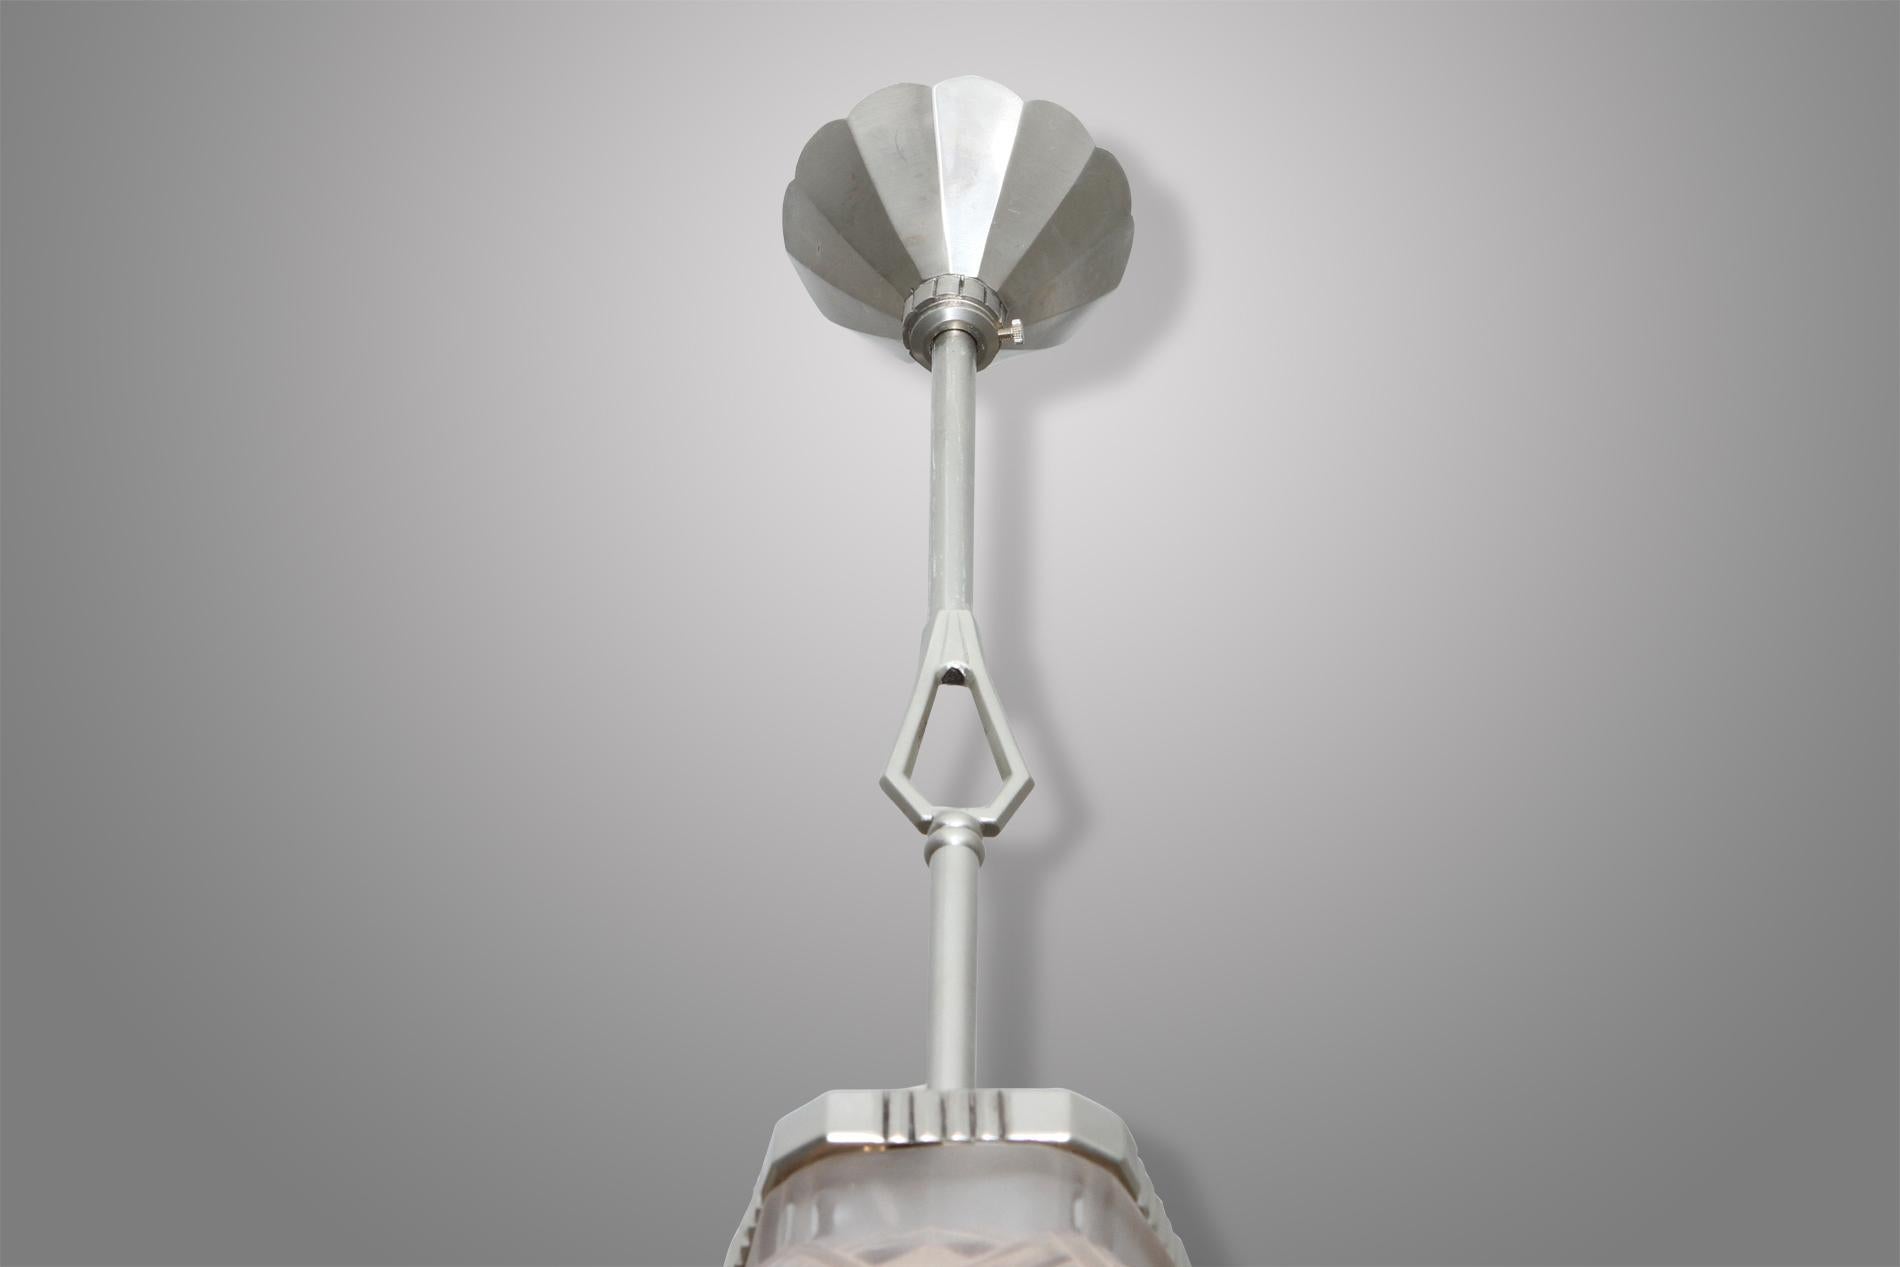 Glass French Art Deco lantern chandelier  by Genet & Michon  For Sale